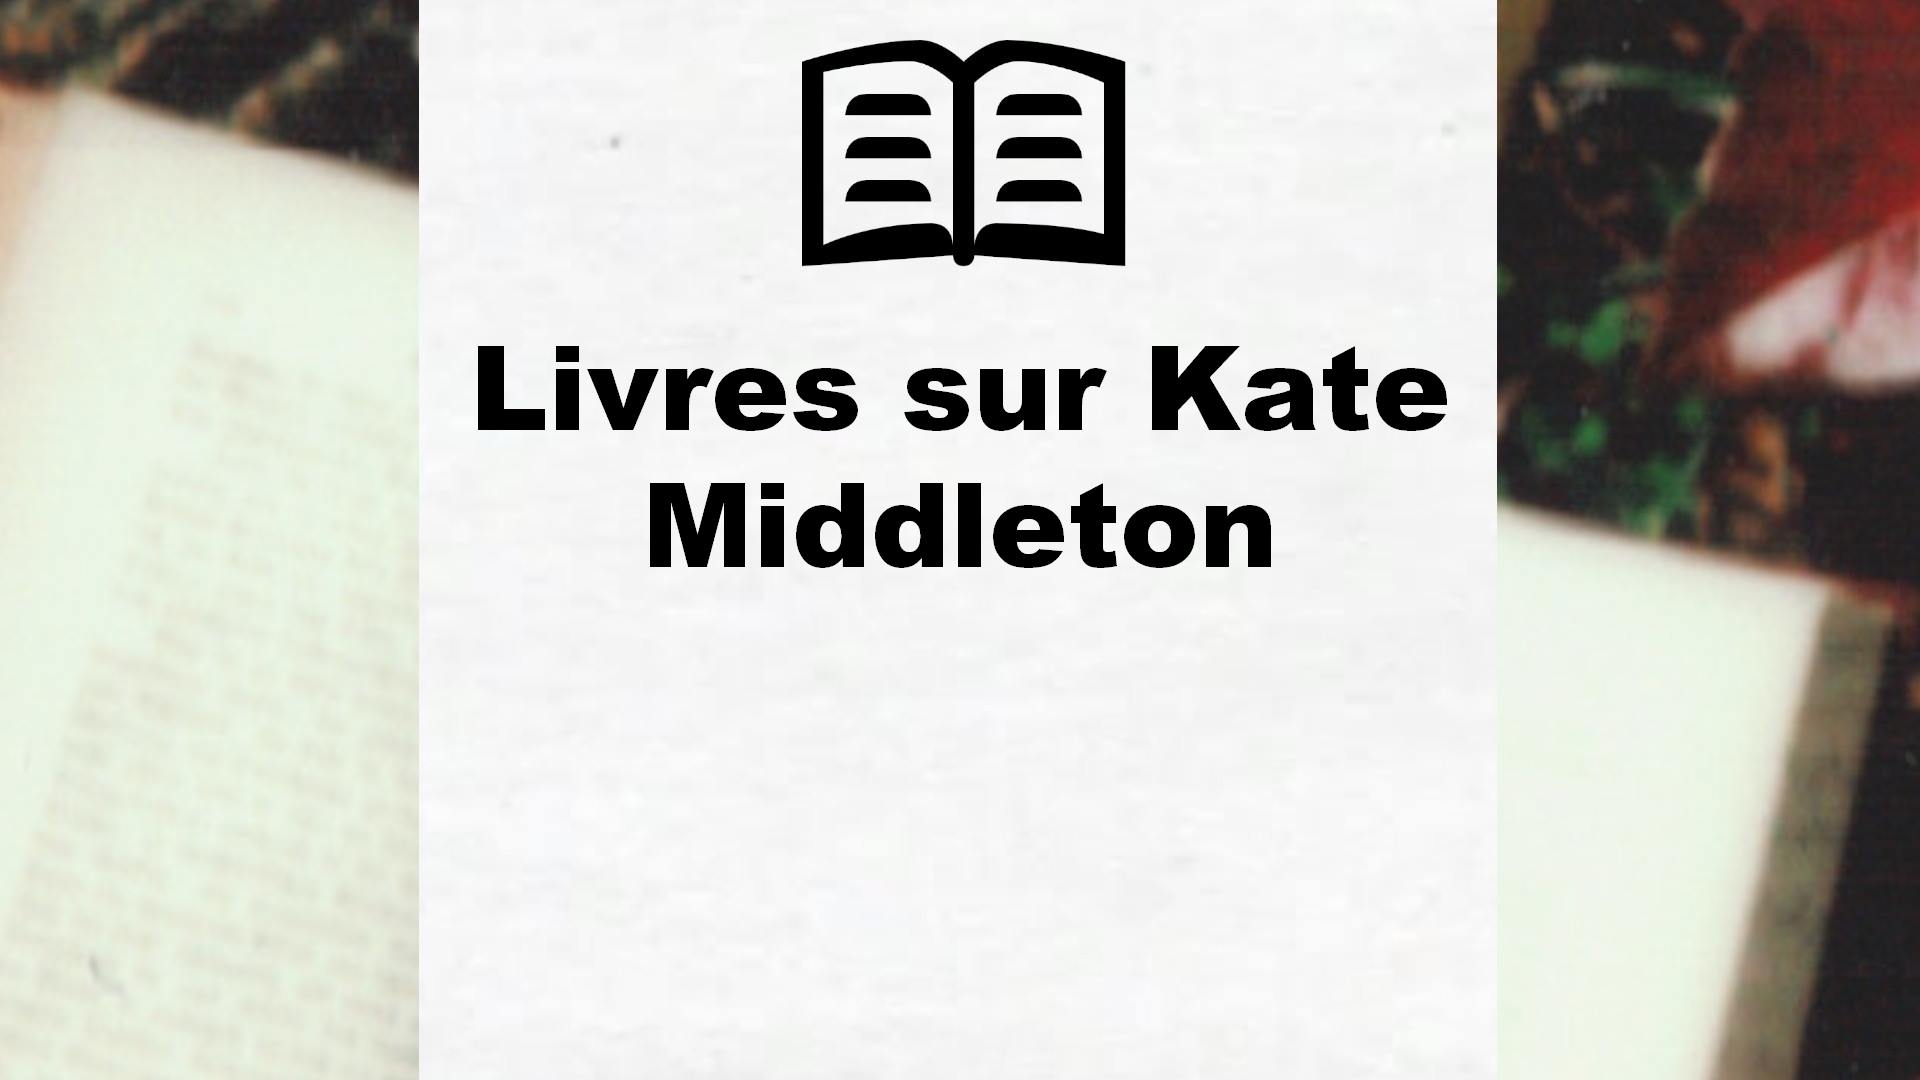 Livres sur Kate Middleton